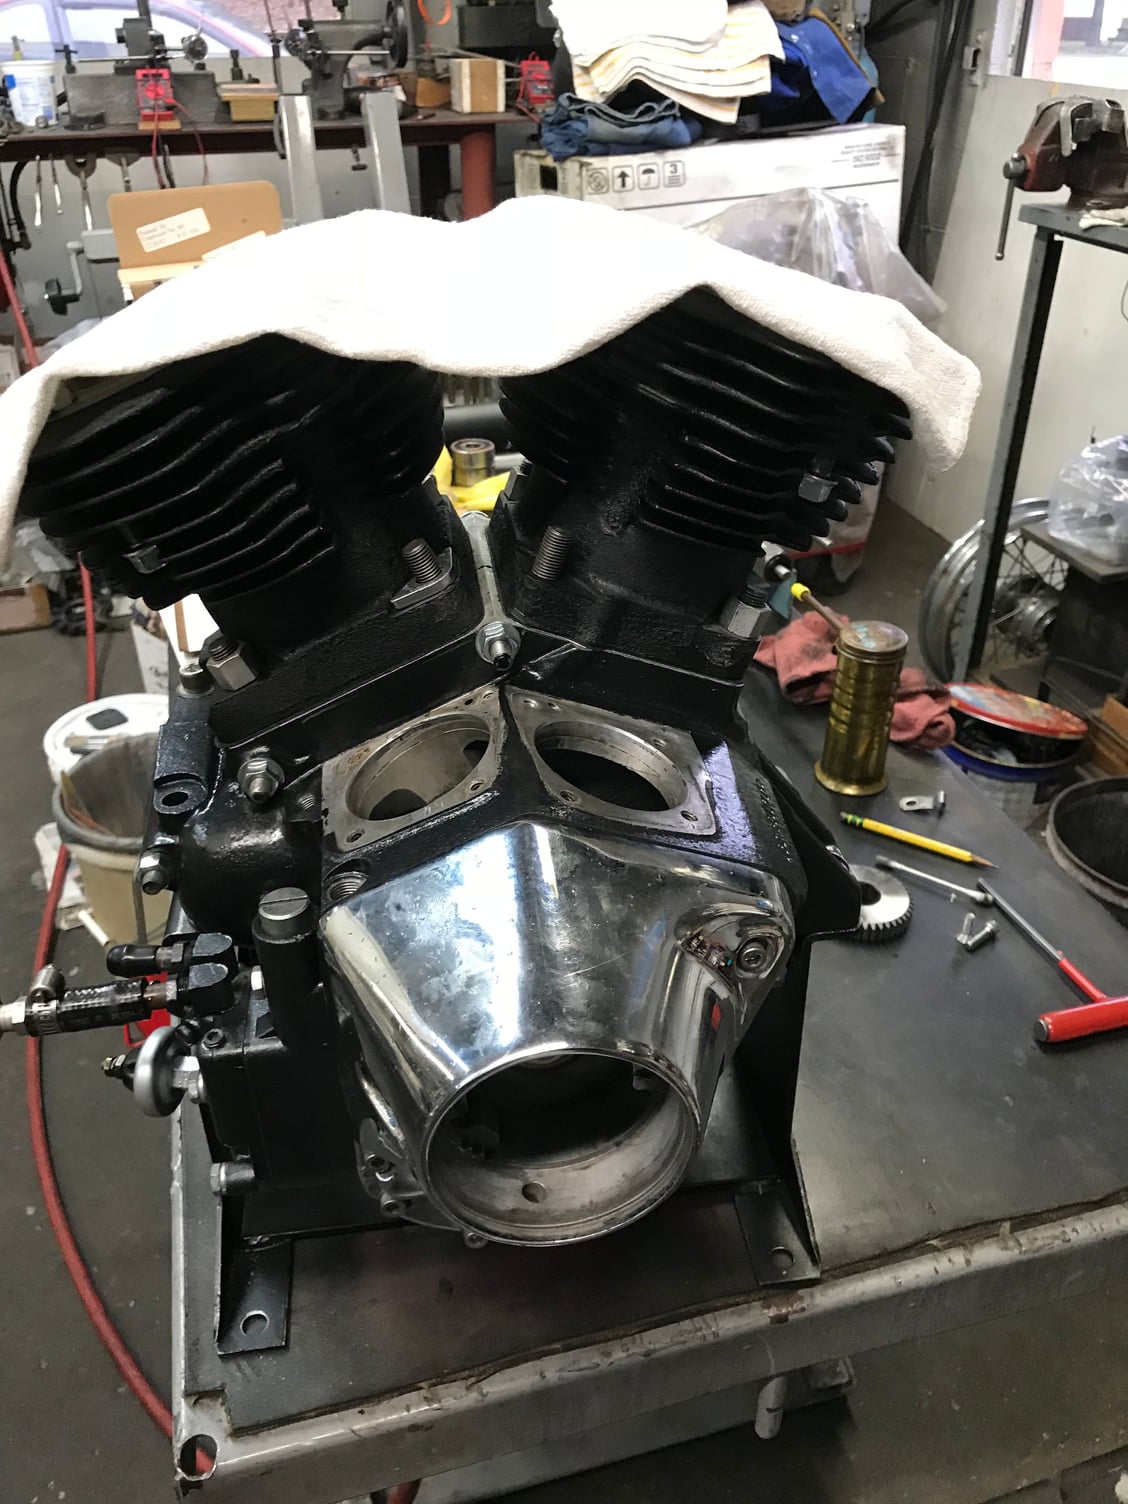 Rebuilt engine need electrical help - Harley Davidson Forums